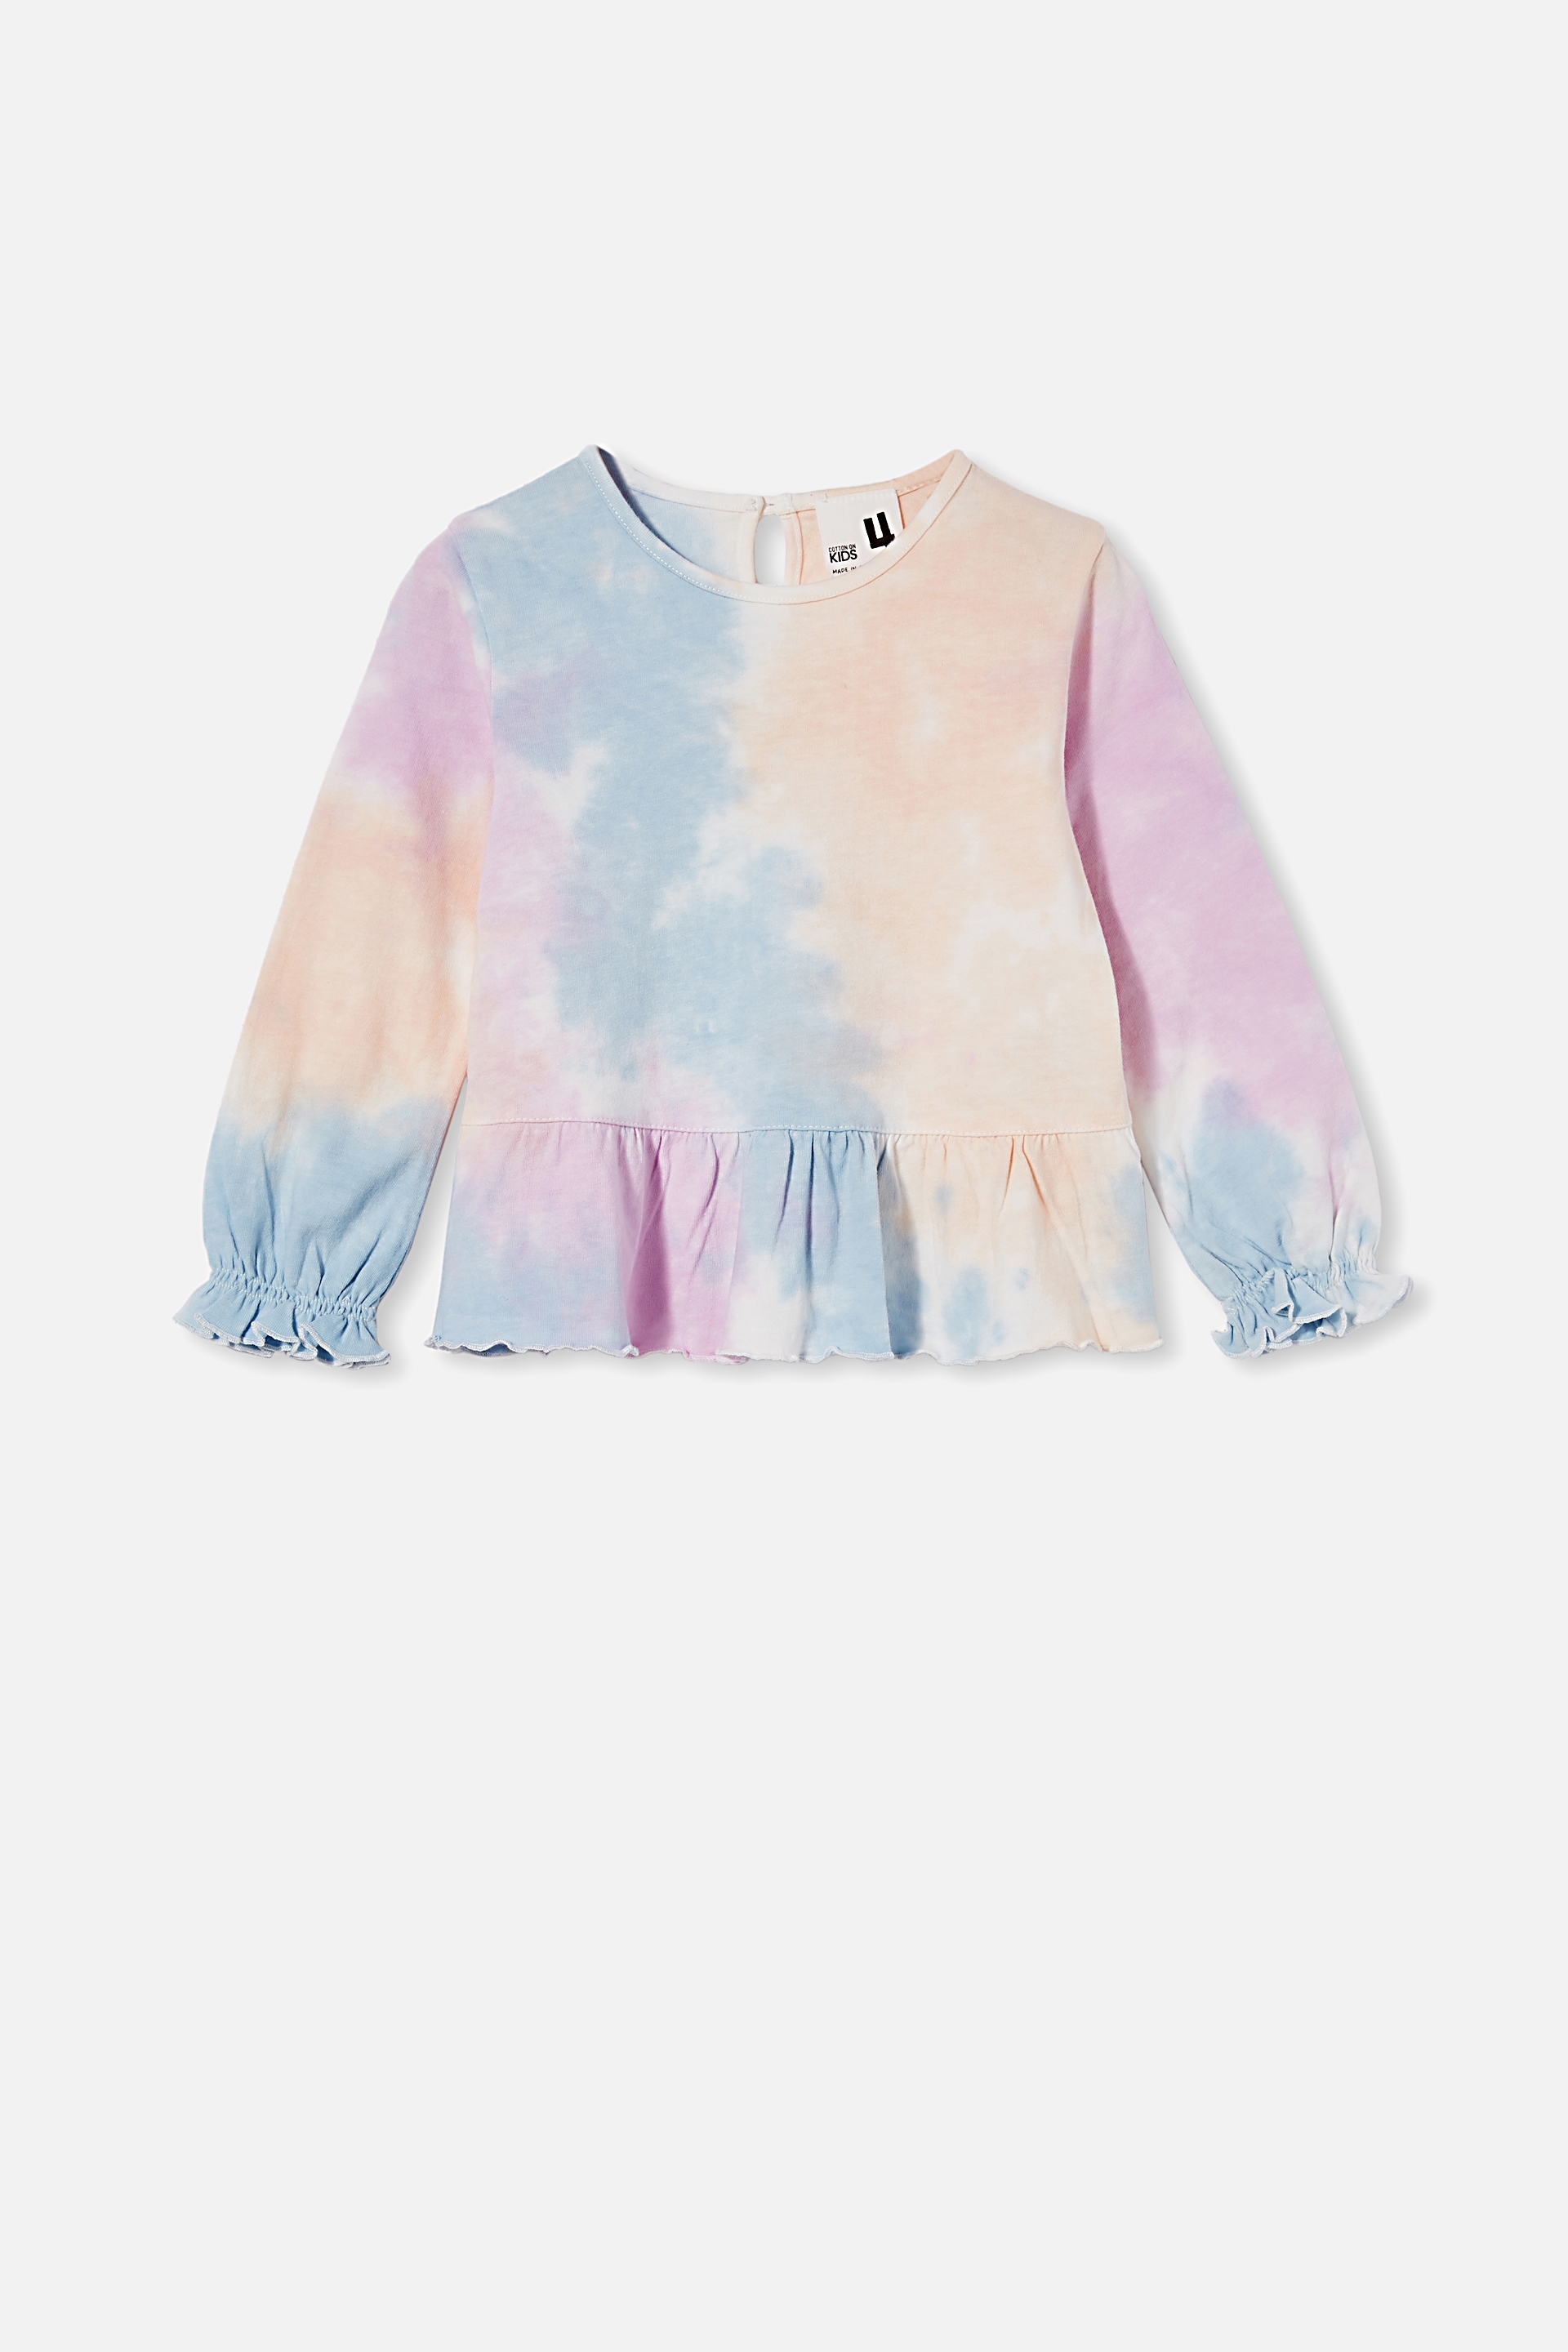 Cotton On Kids - Bridget Long Sleeve Frill Top - Aqua rainbow tie dye